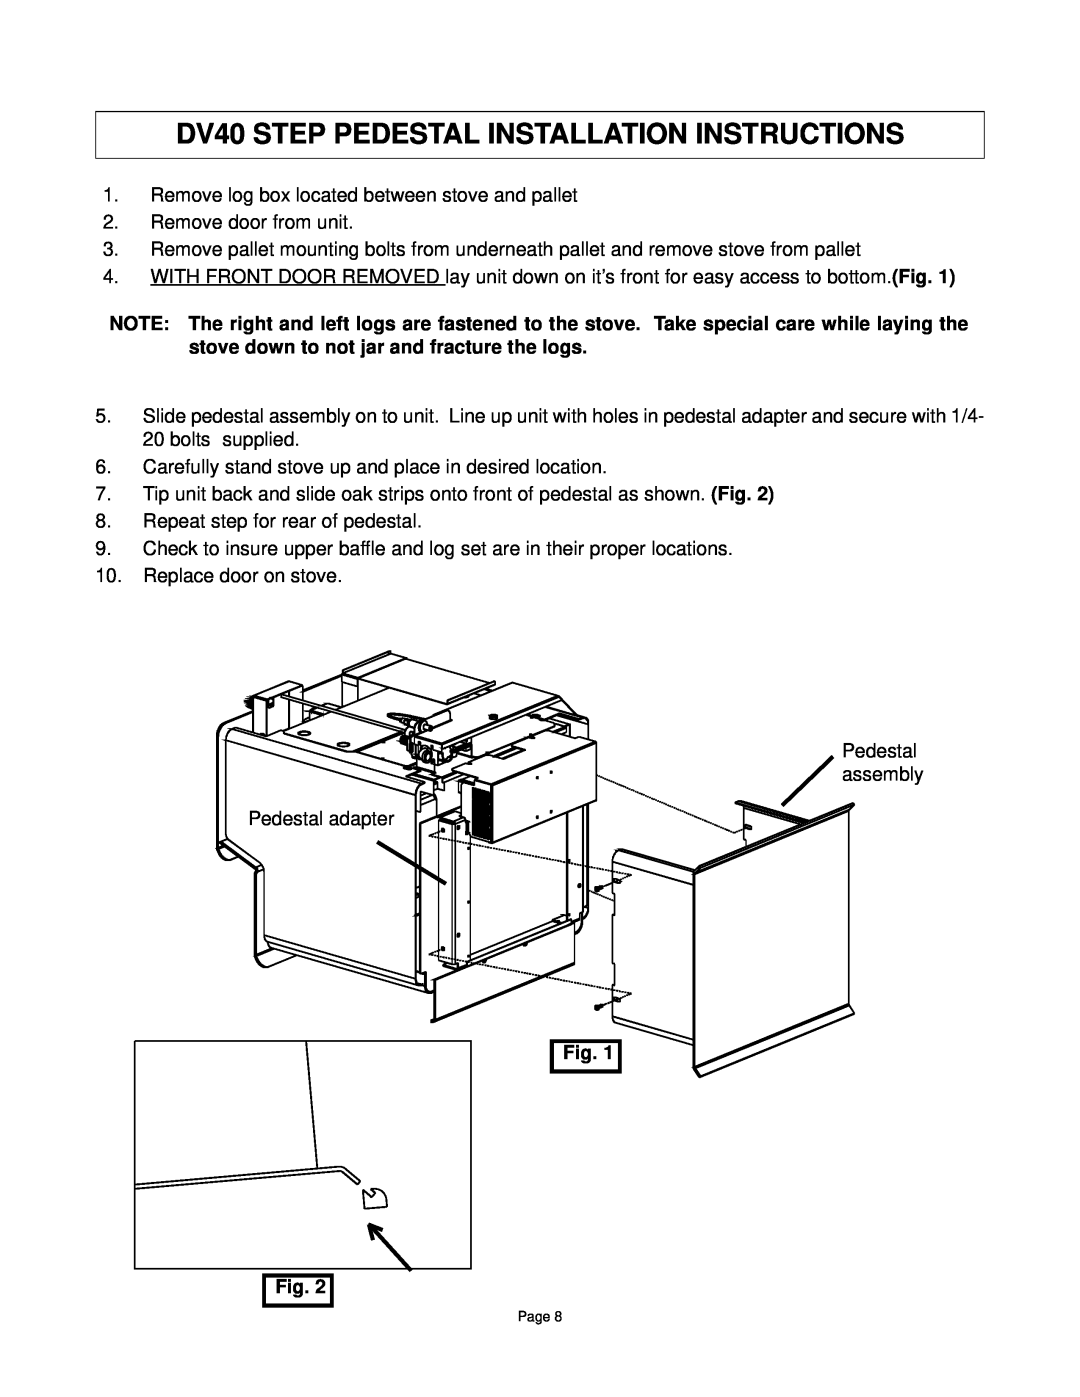 Quadra-Fire DV-40 manual DV40 STEP PEDESTAL INSTALLATION INSTRUCTIONS, Fig. Fig 